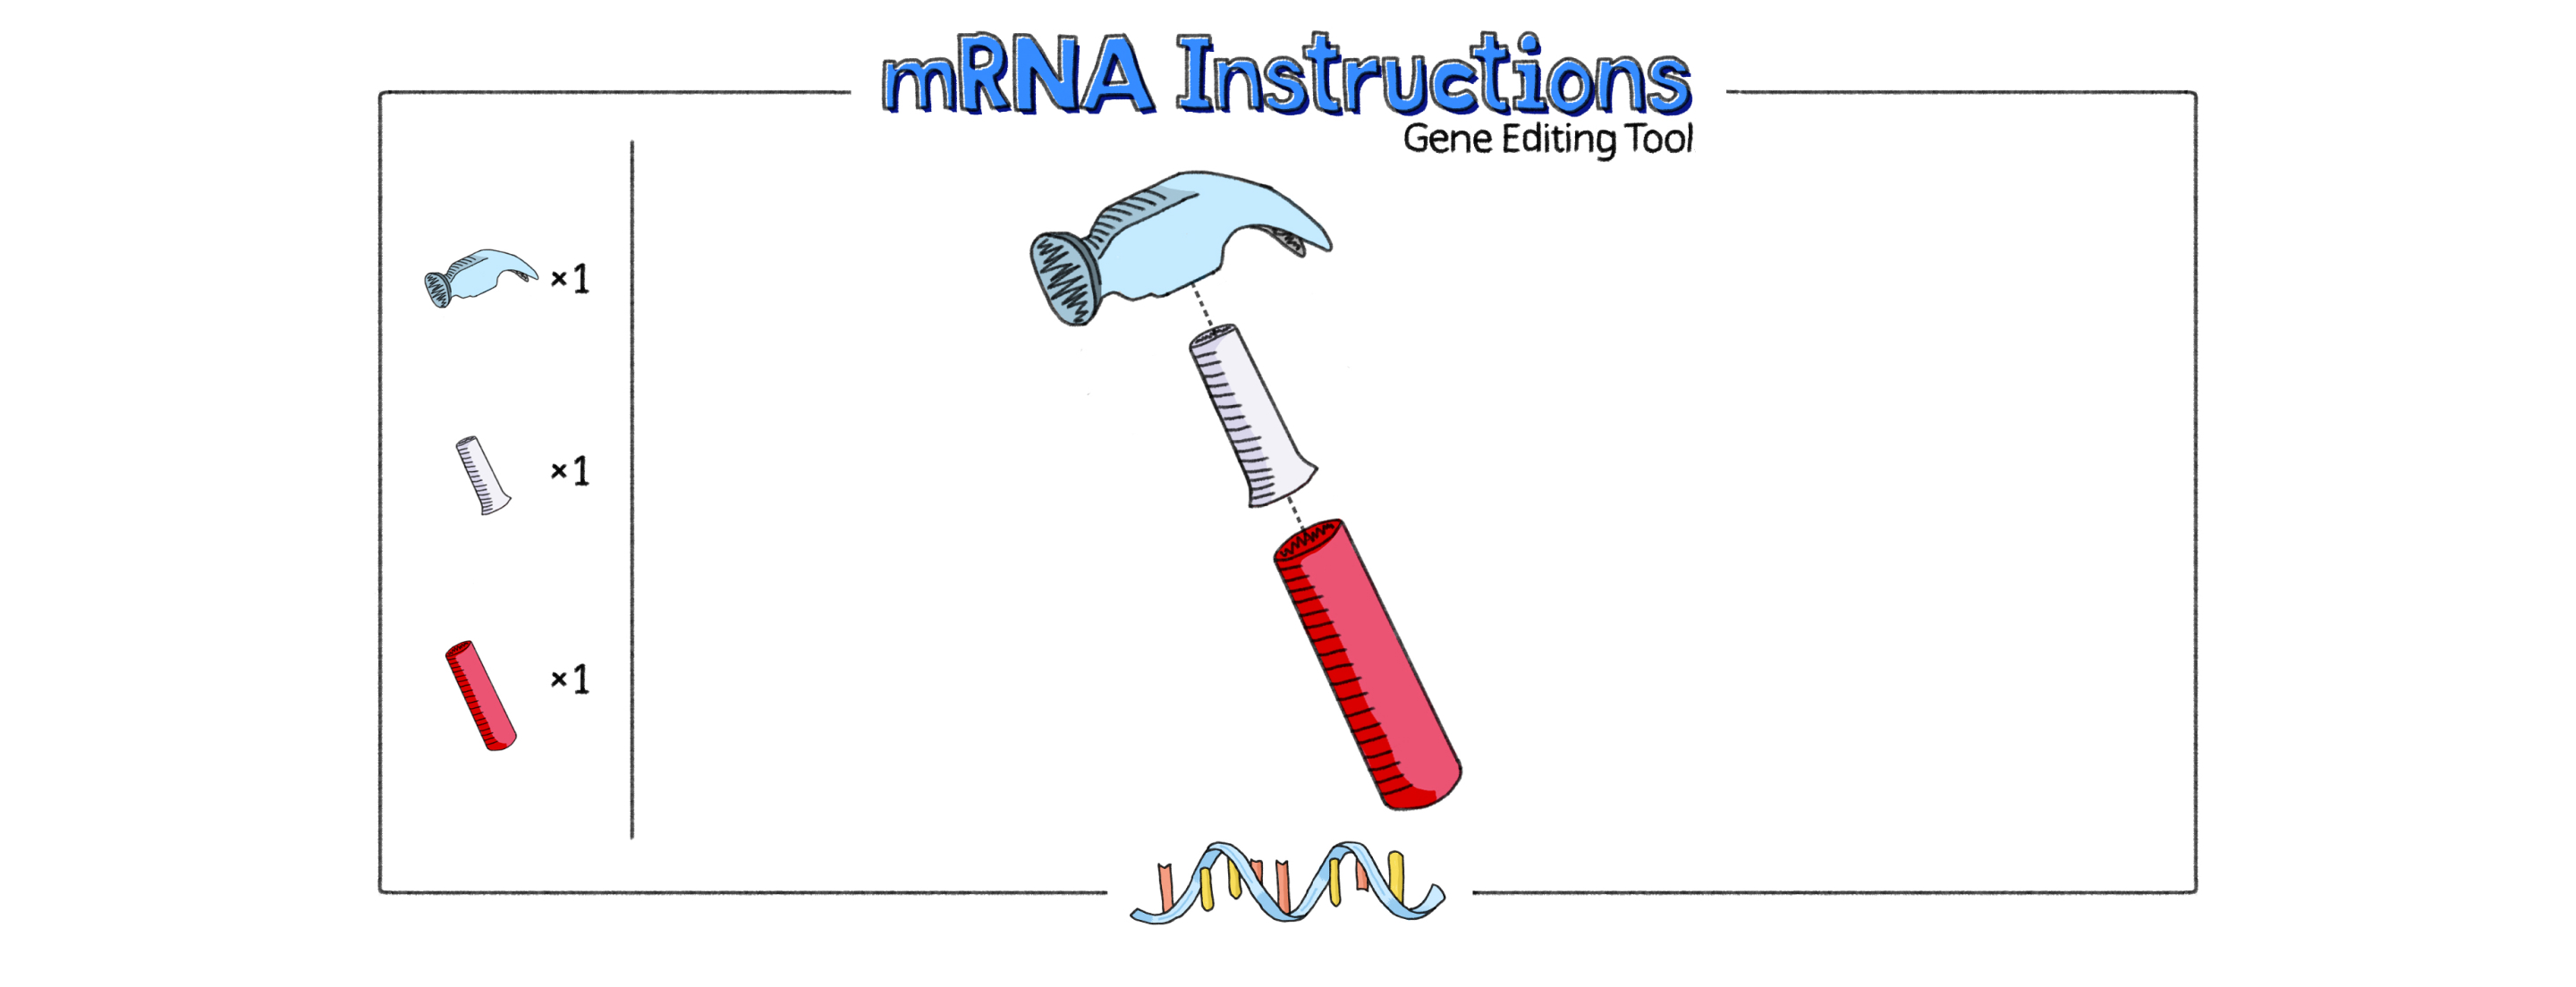 mRNA_Part02_Image01-final_0.jpg